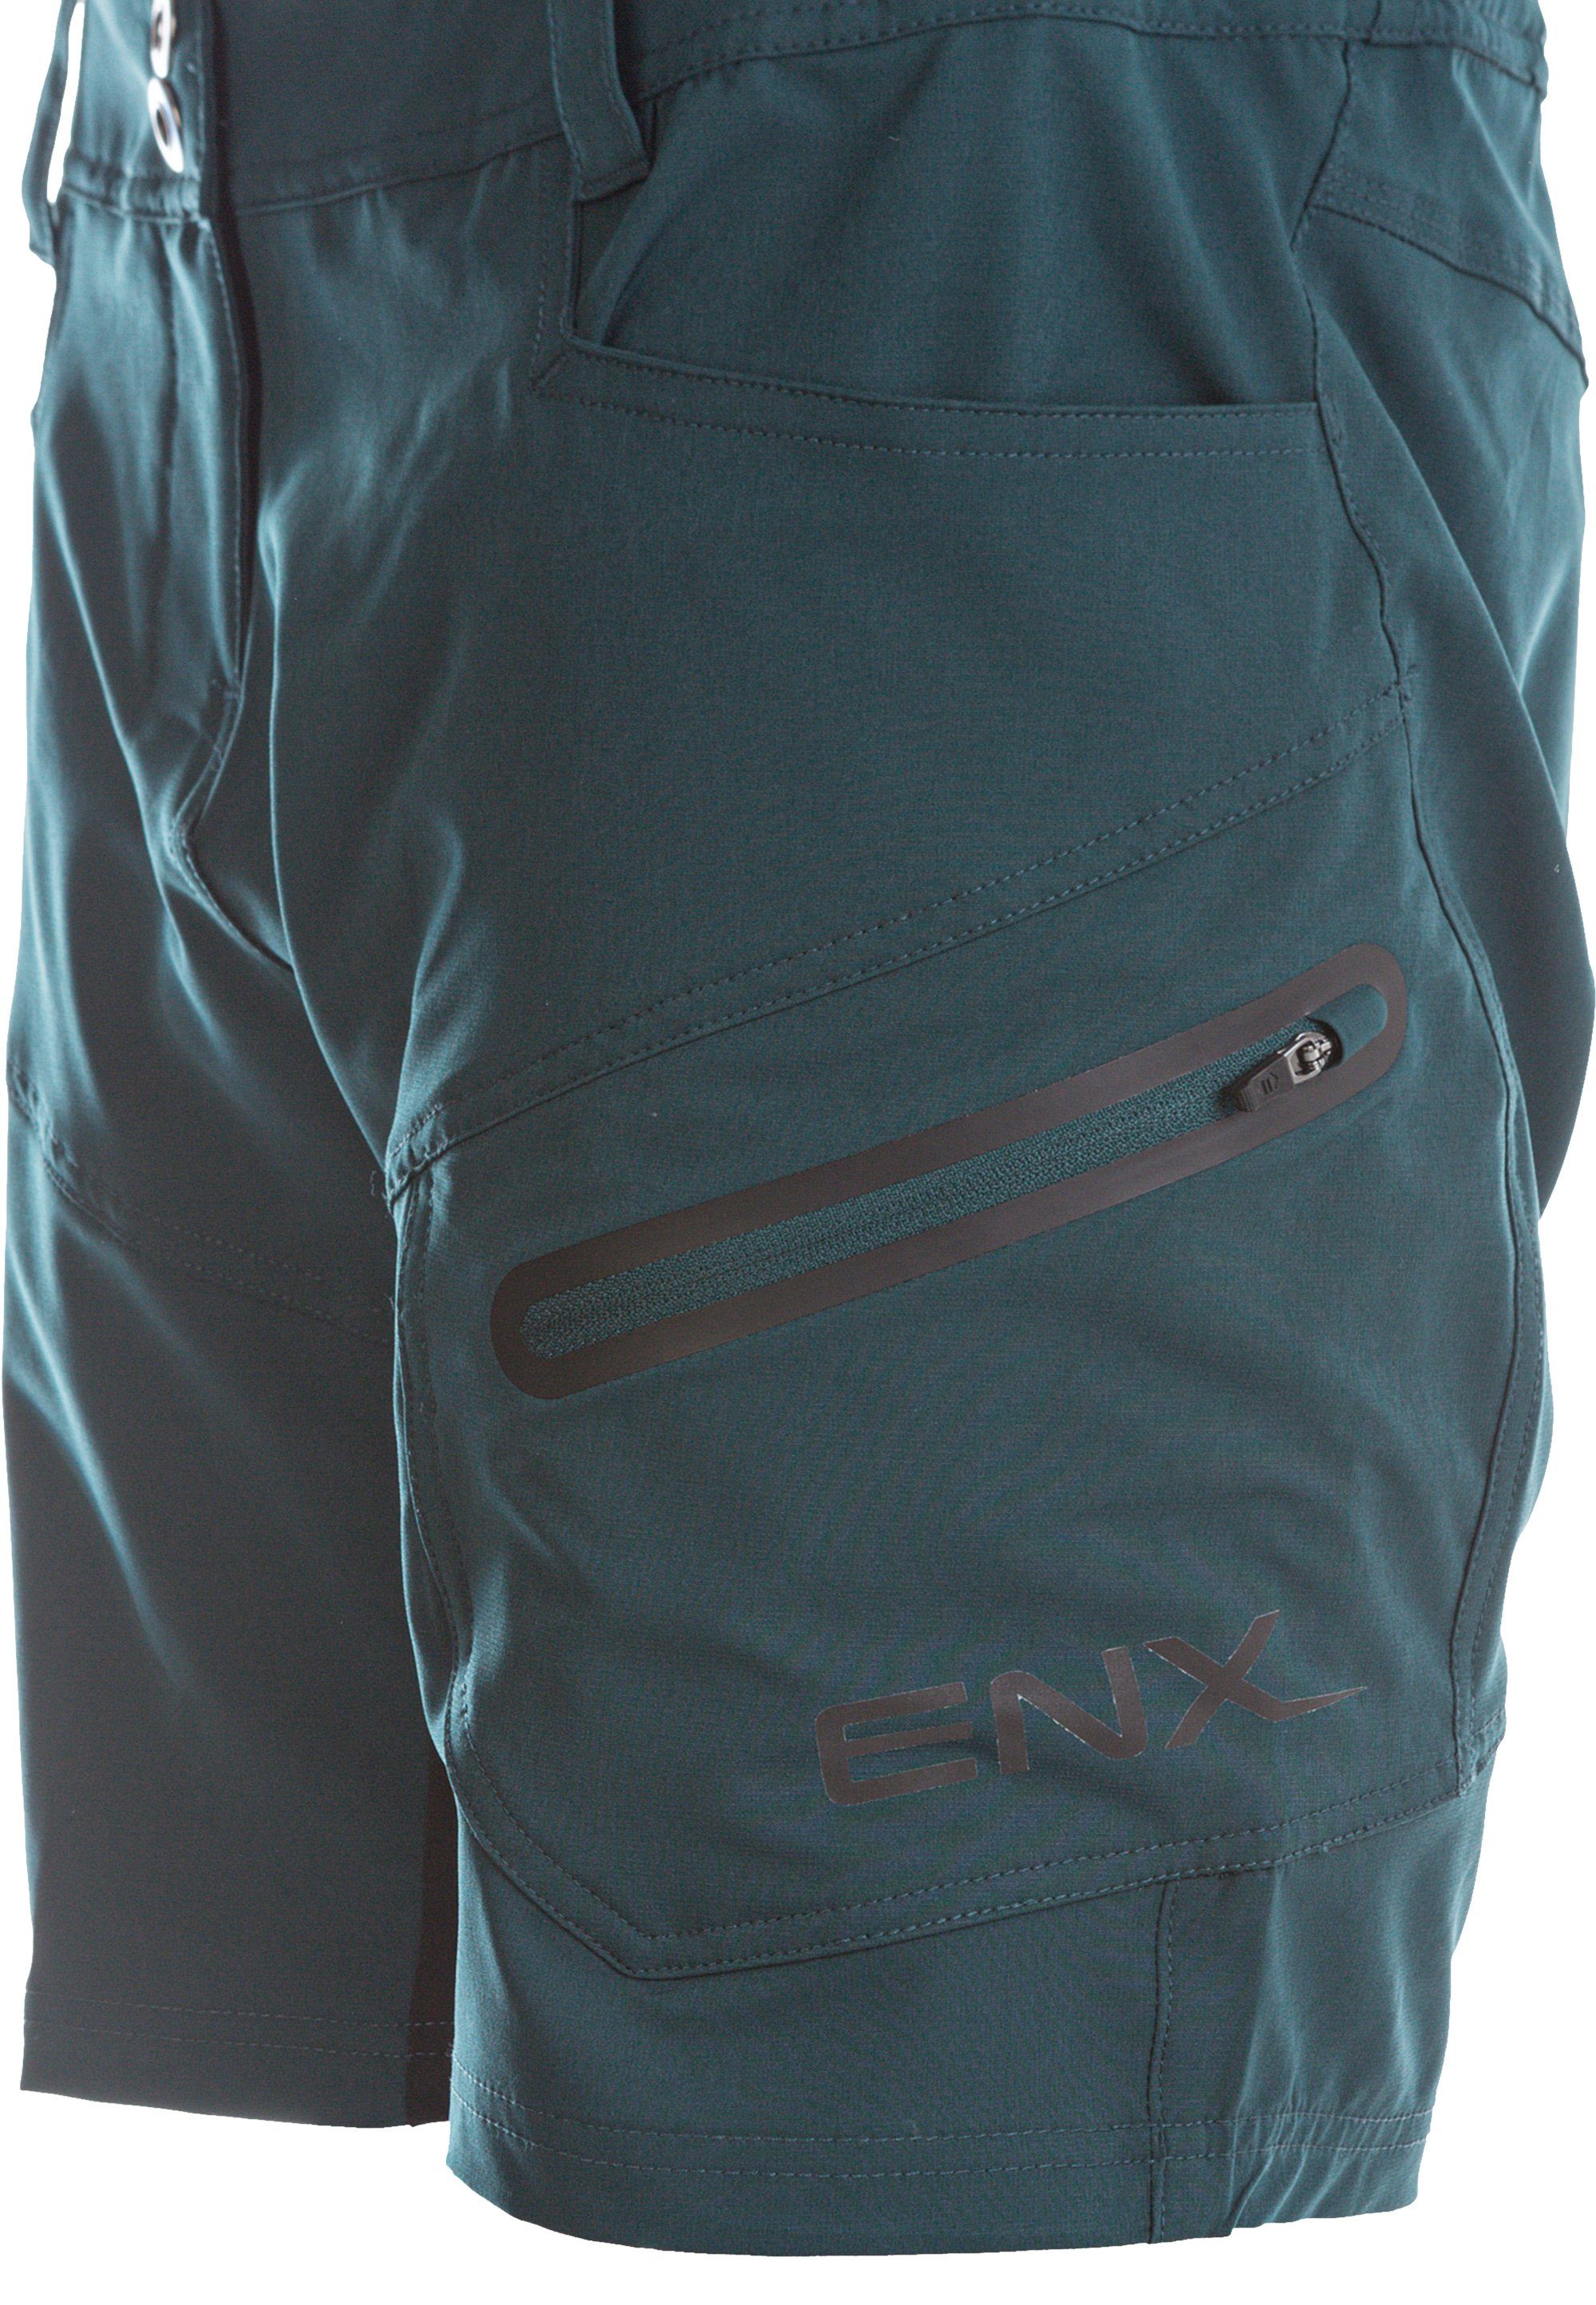 ENDURANCE Radhose Jamilla W 2 Innen-Tights in Shorts mit 1 herausnehmbarer dunkelgrün